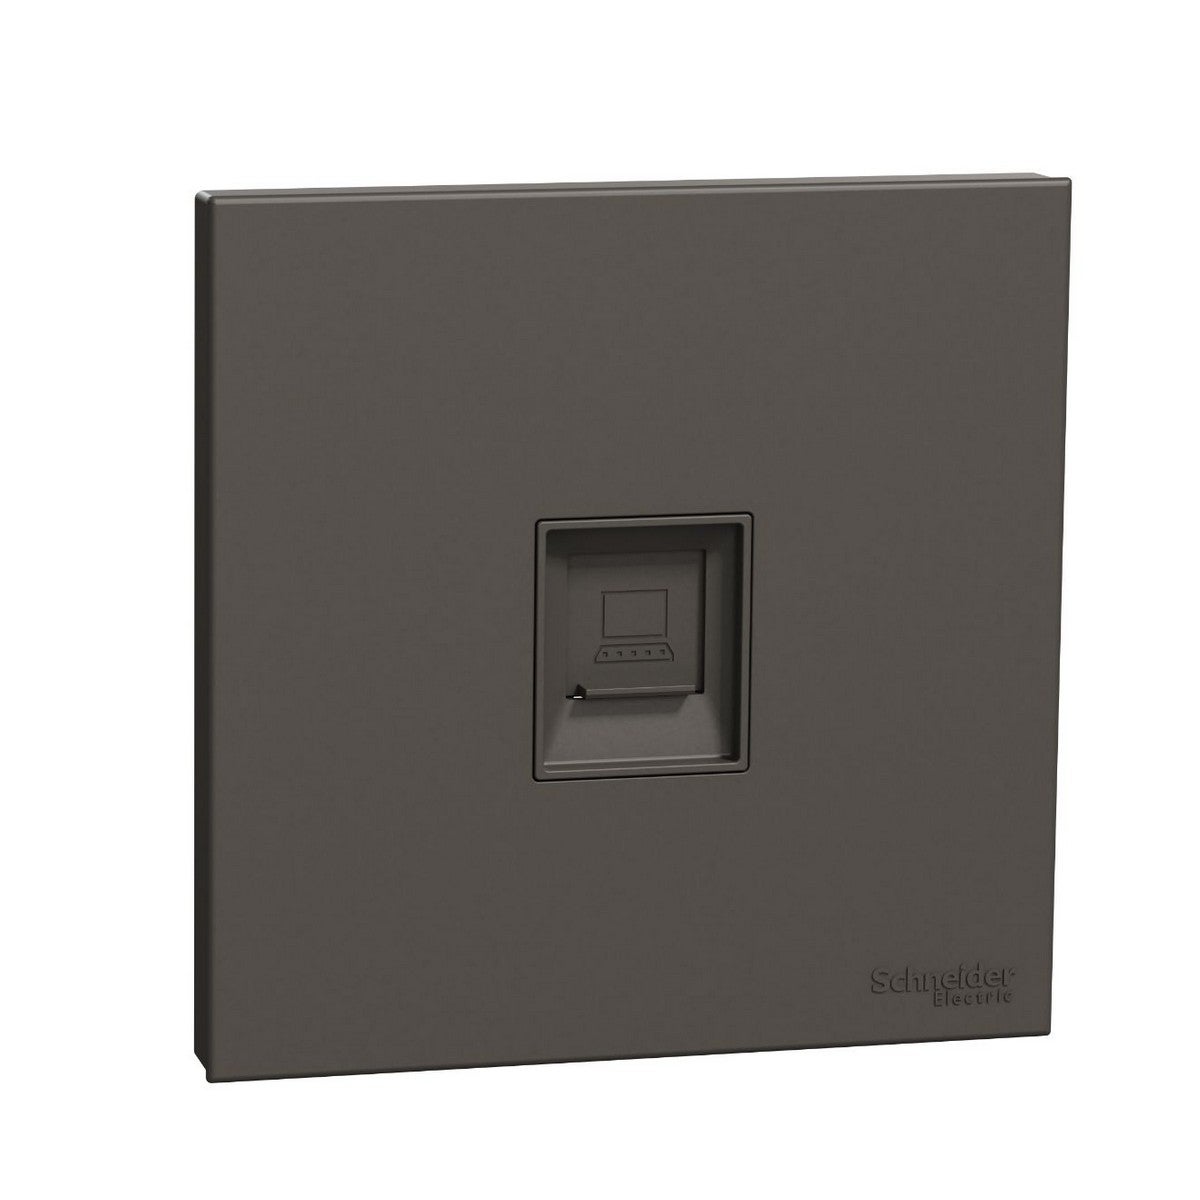 AvatarOn C, Data socket, RJ45, Cat 5e, 1 gang, keystone on shuttered wall plate, dark grey